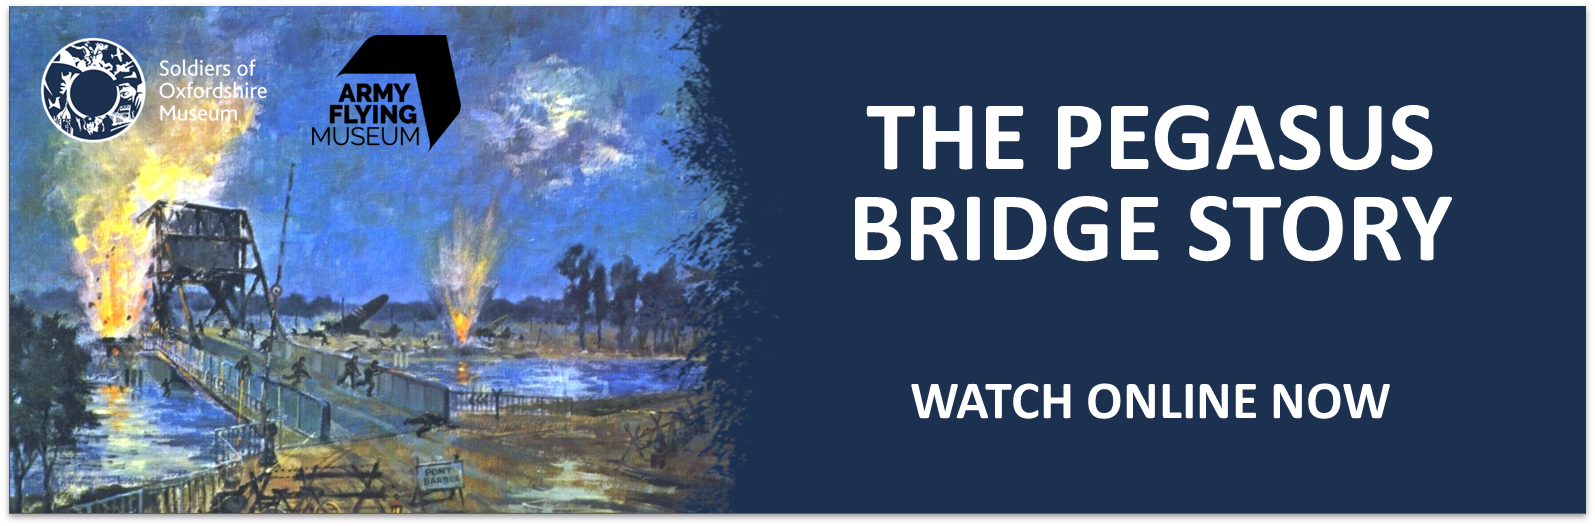 Watch The Pegasus Bridge Story